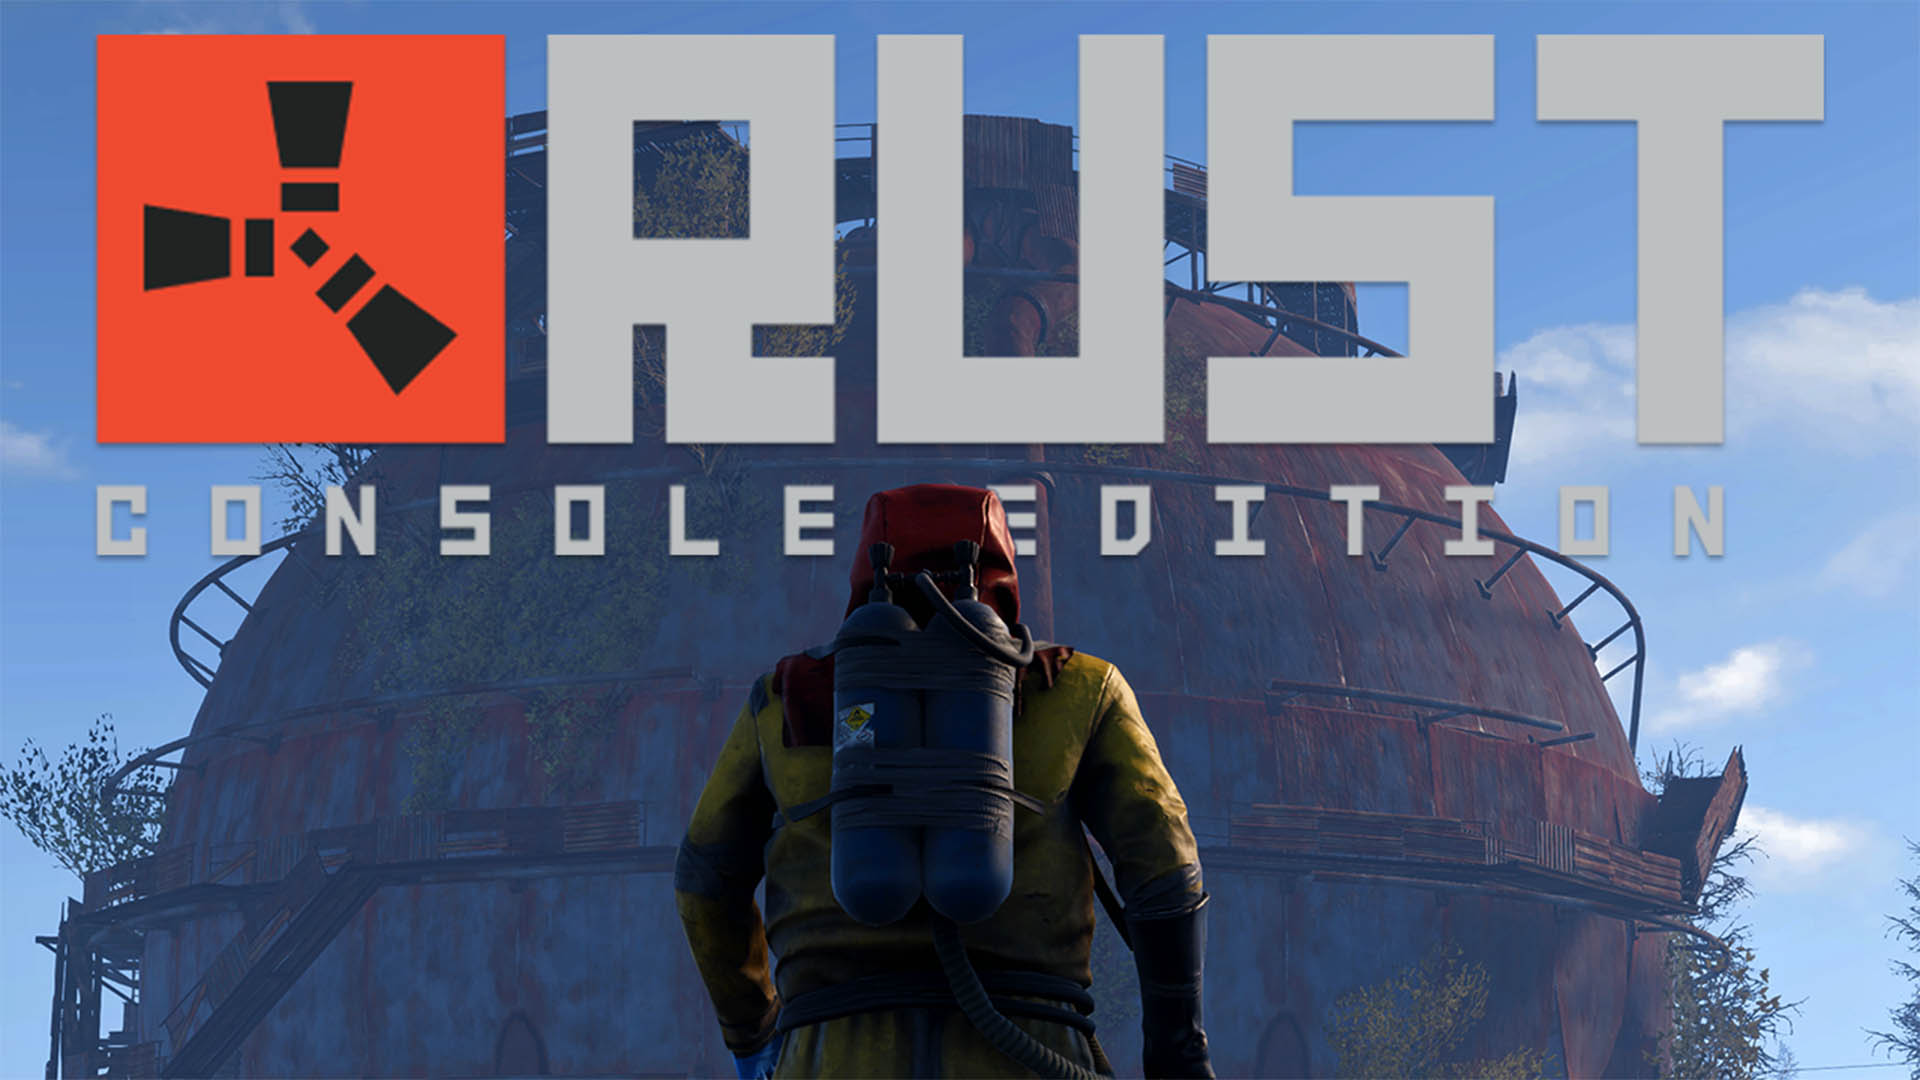 Rust Gaming Community